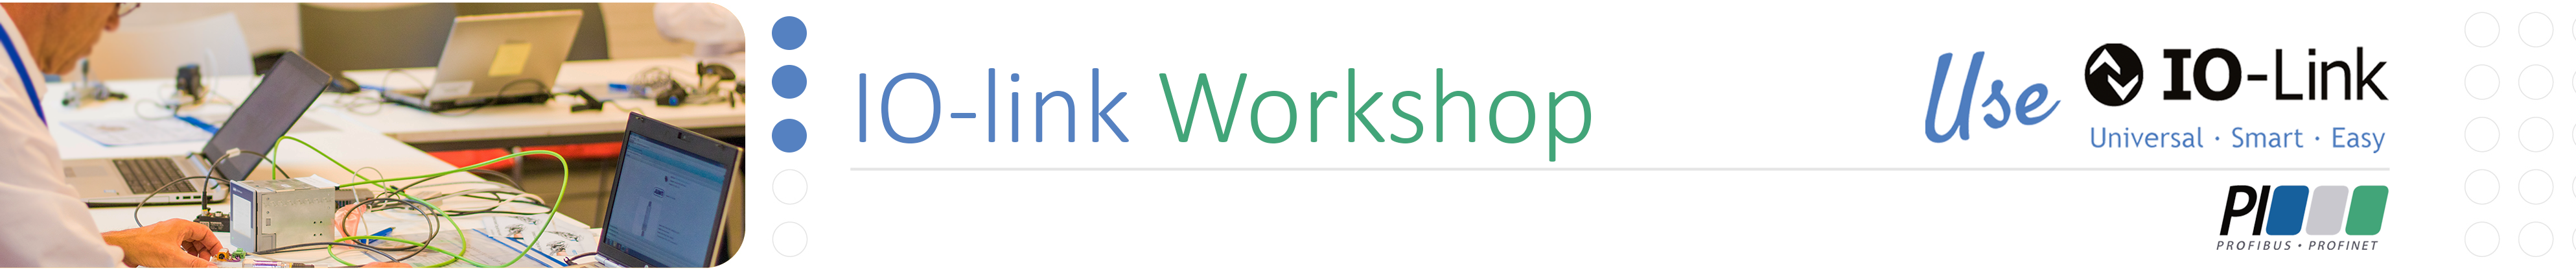 IO-link workshop